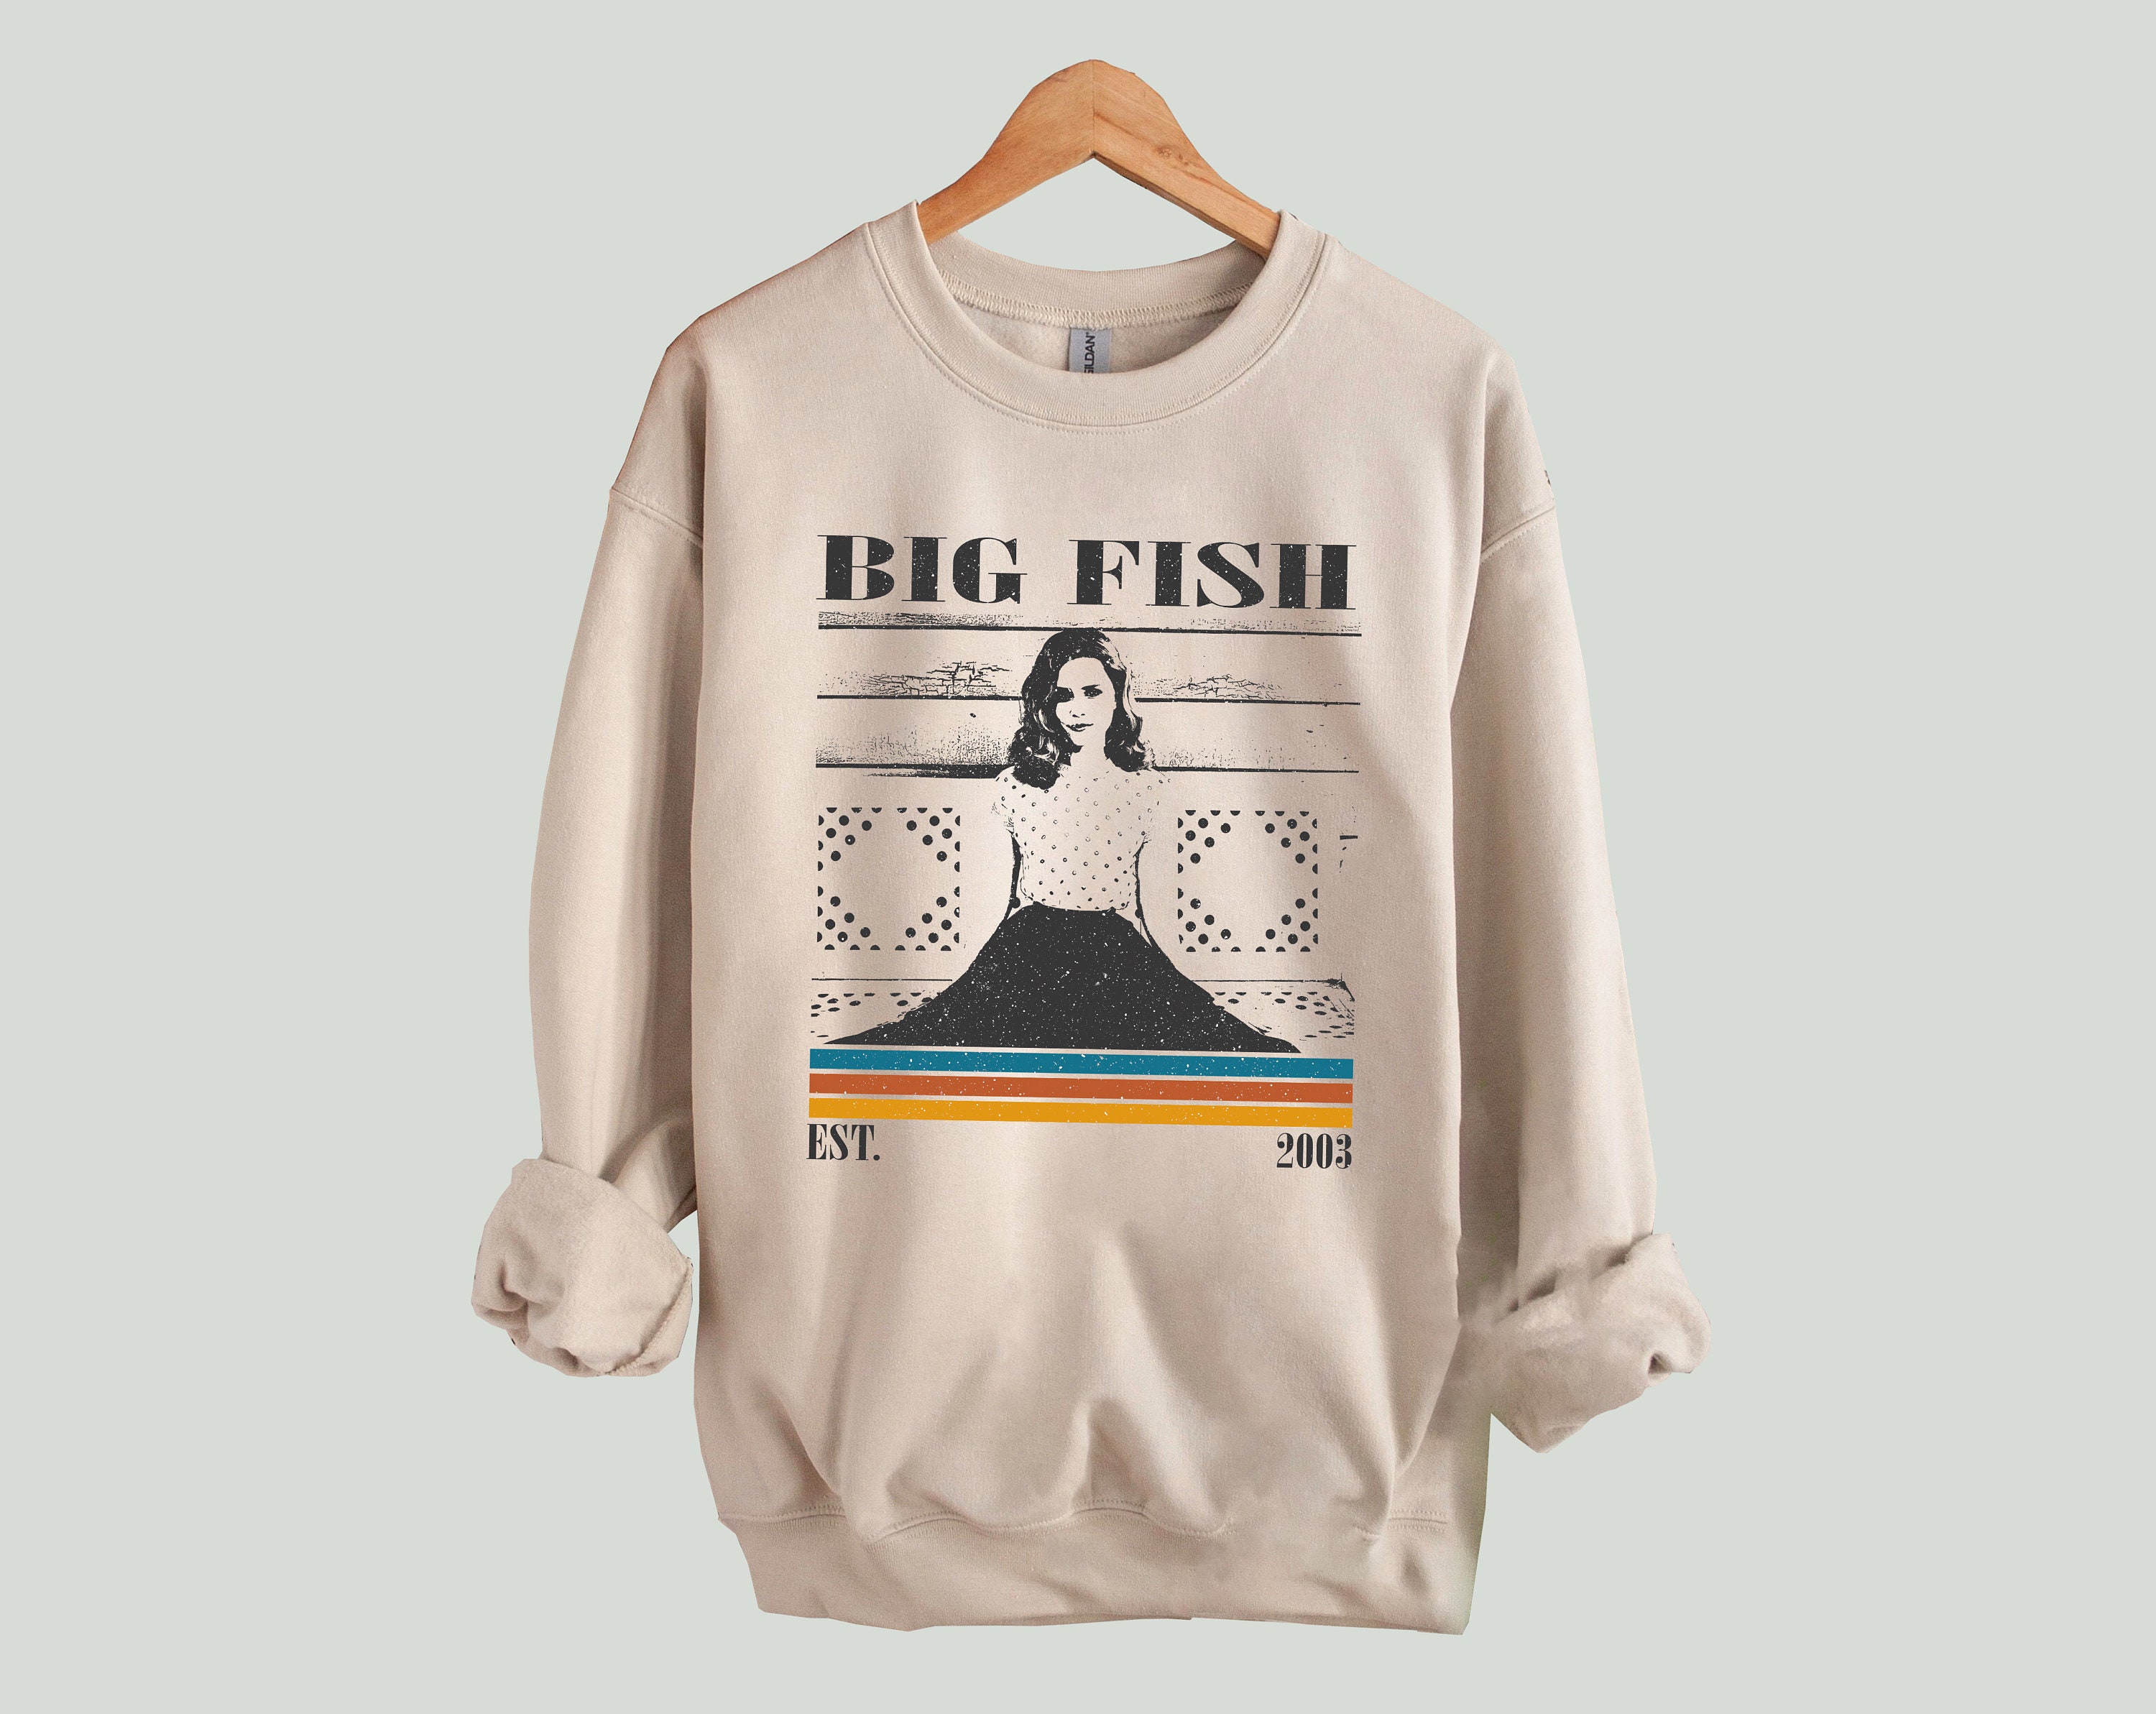 Big Fish T-Shirt, Big Fish Shirt, Big Fish Sweatshirt, Hip Hop Graphic, unisex Shirt, Trendy Shirt, Retro Vintage, unisex Shirt